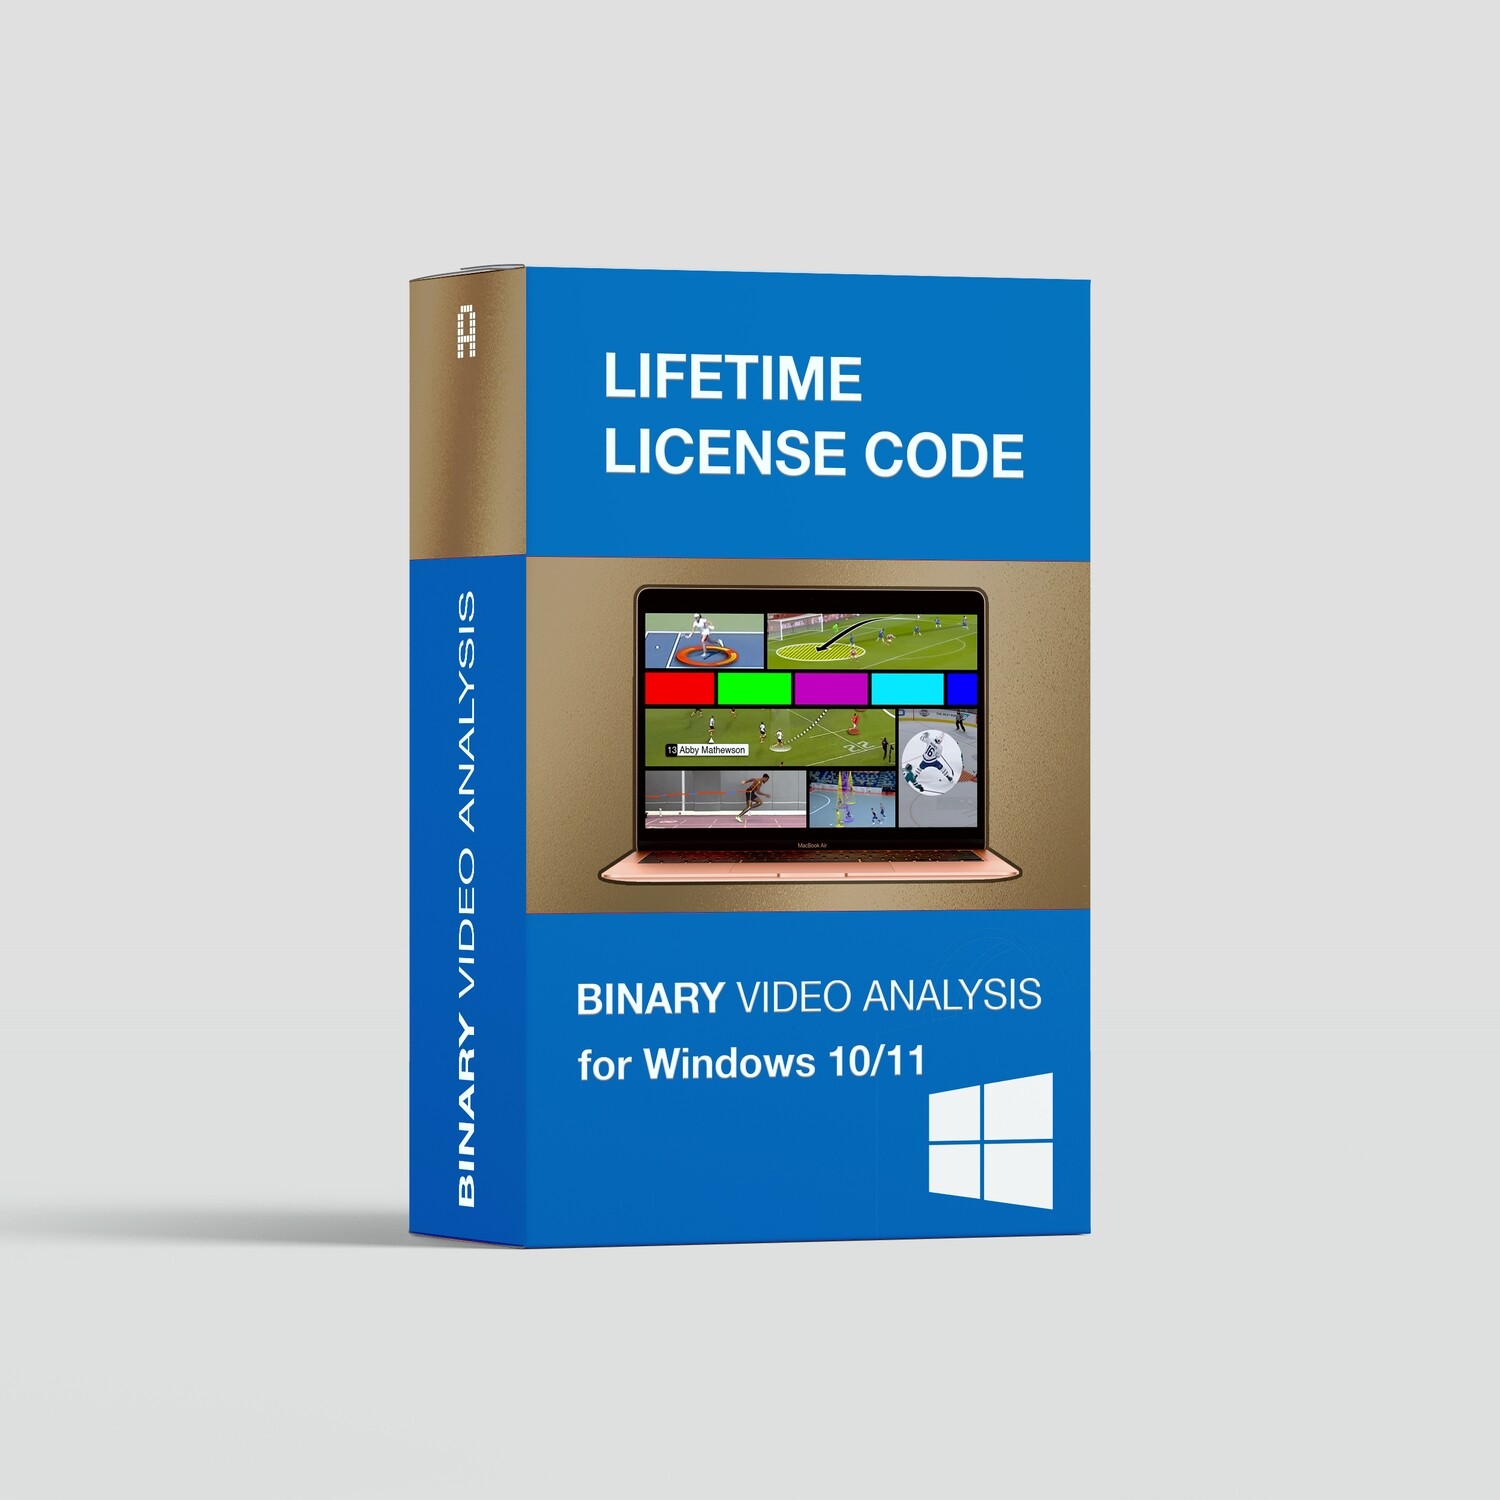 Video Analysis Lifetime License Code for Windows 10/11